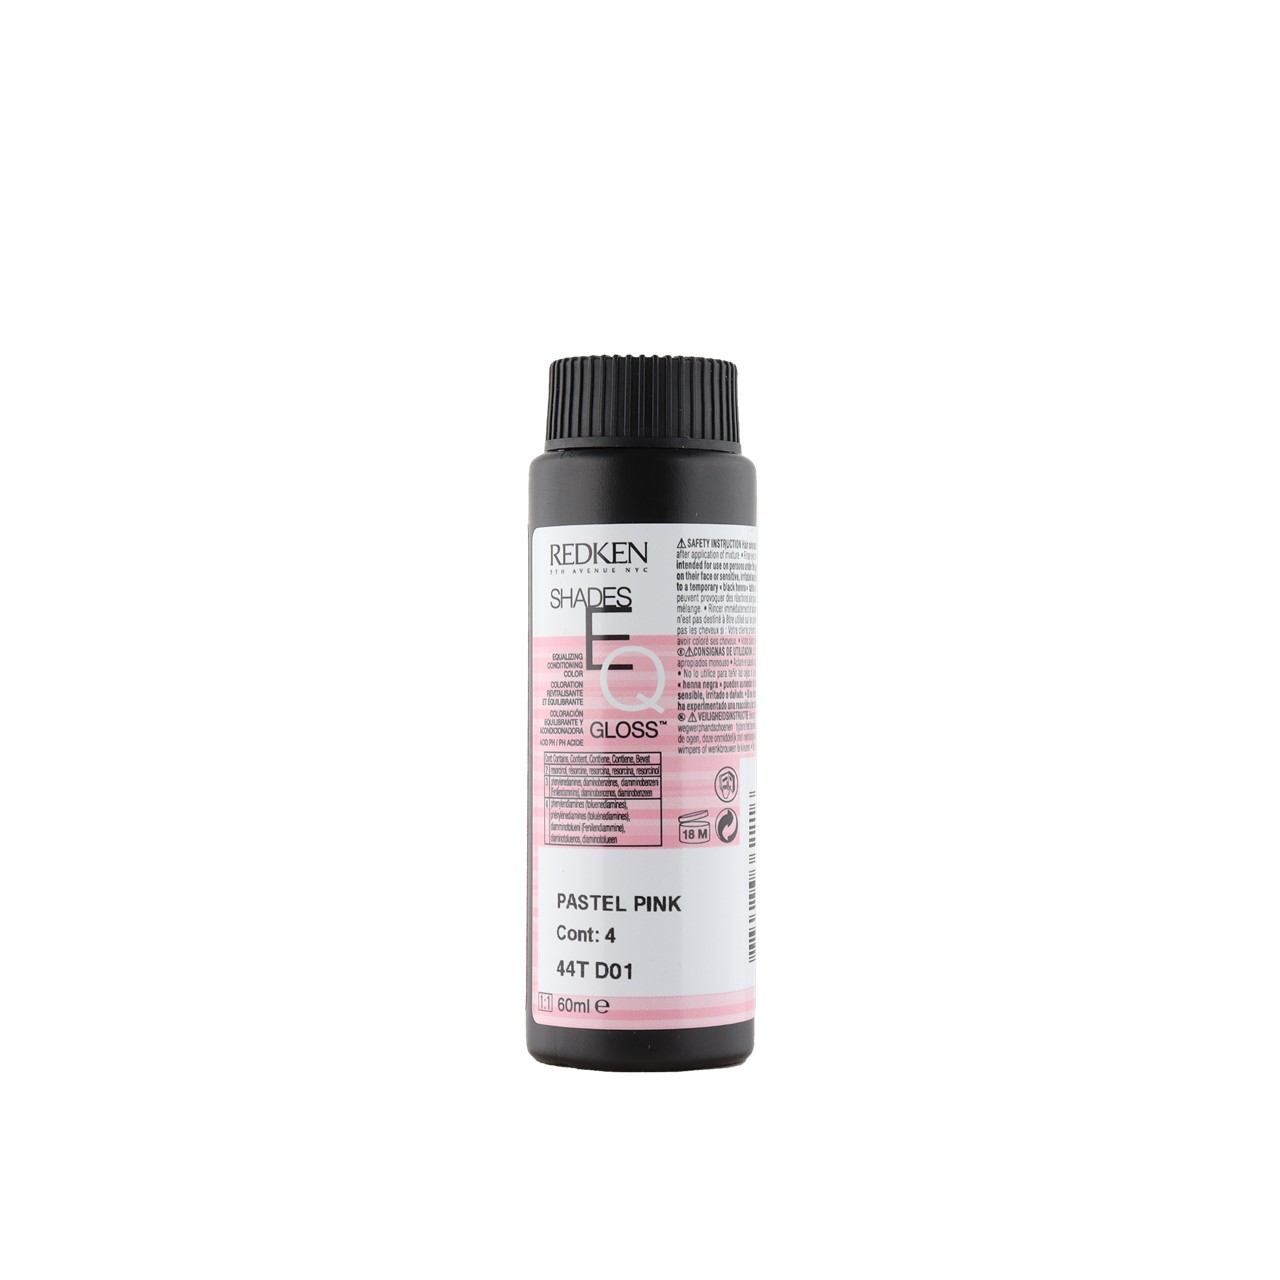 Redken Shades EQ Gloss Demi-Permanent Hair Dye Pastel Pink 60ml (2.03fl oz)